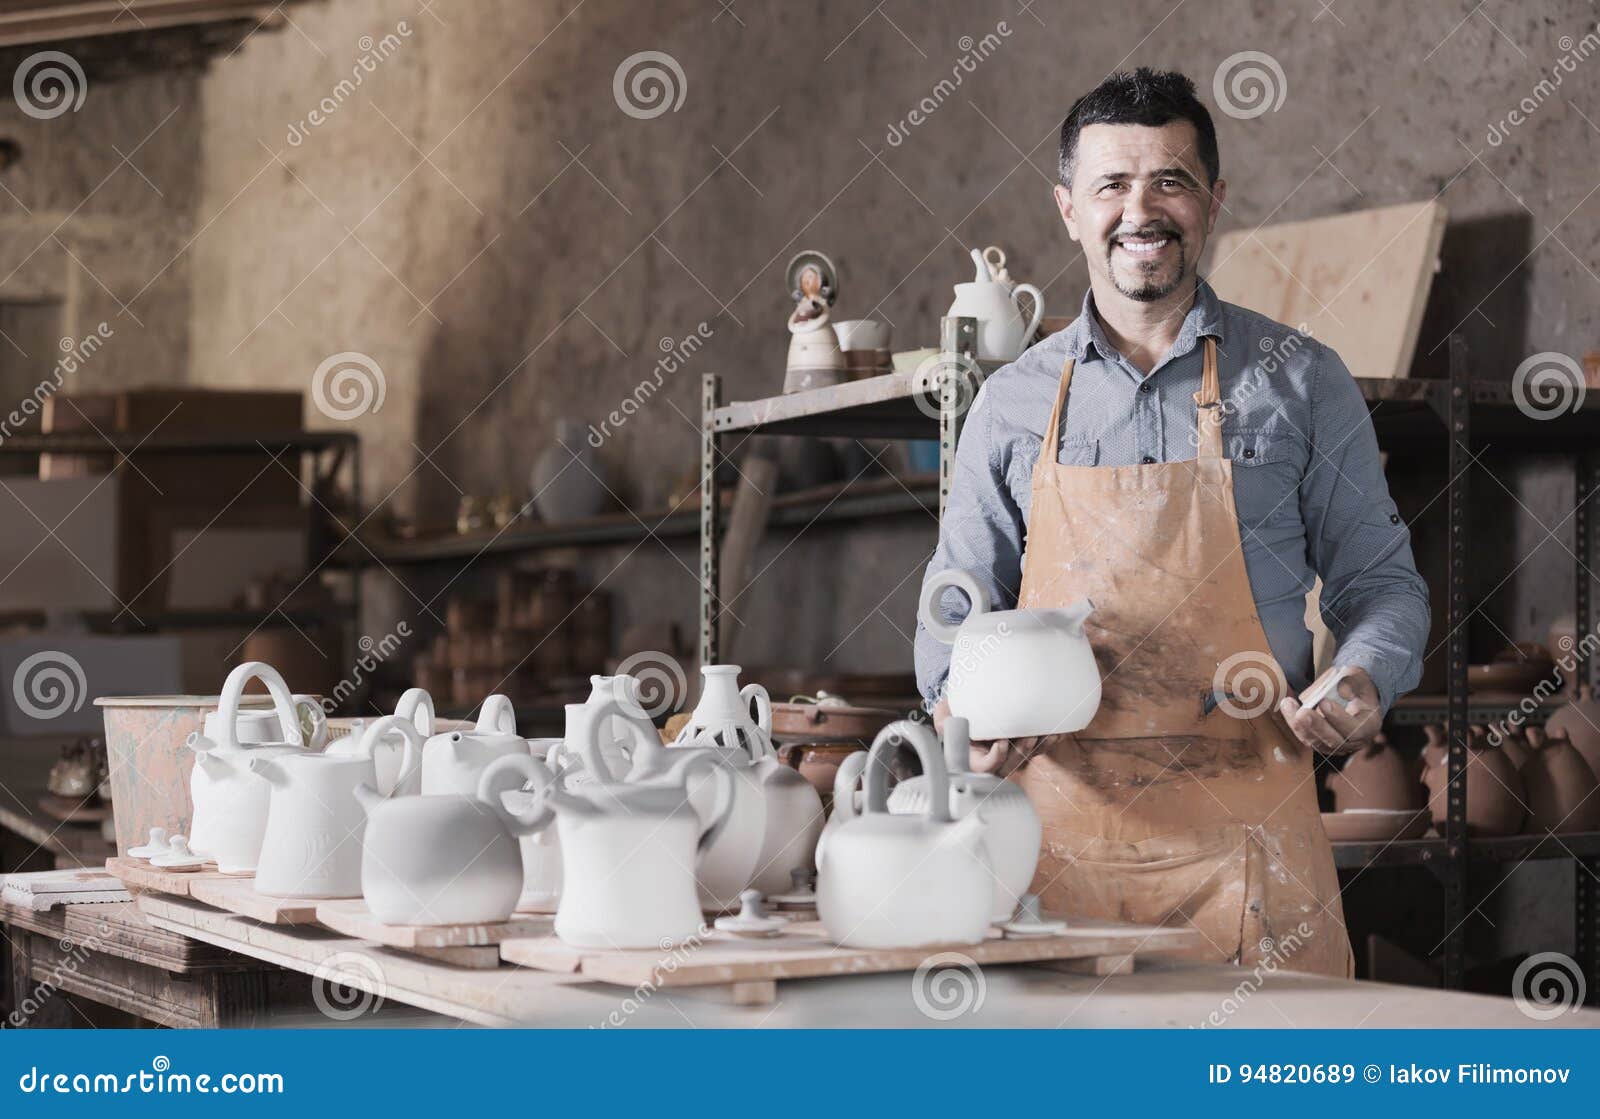 Positive man potter holding ceramic vessels in atelier